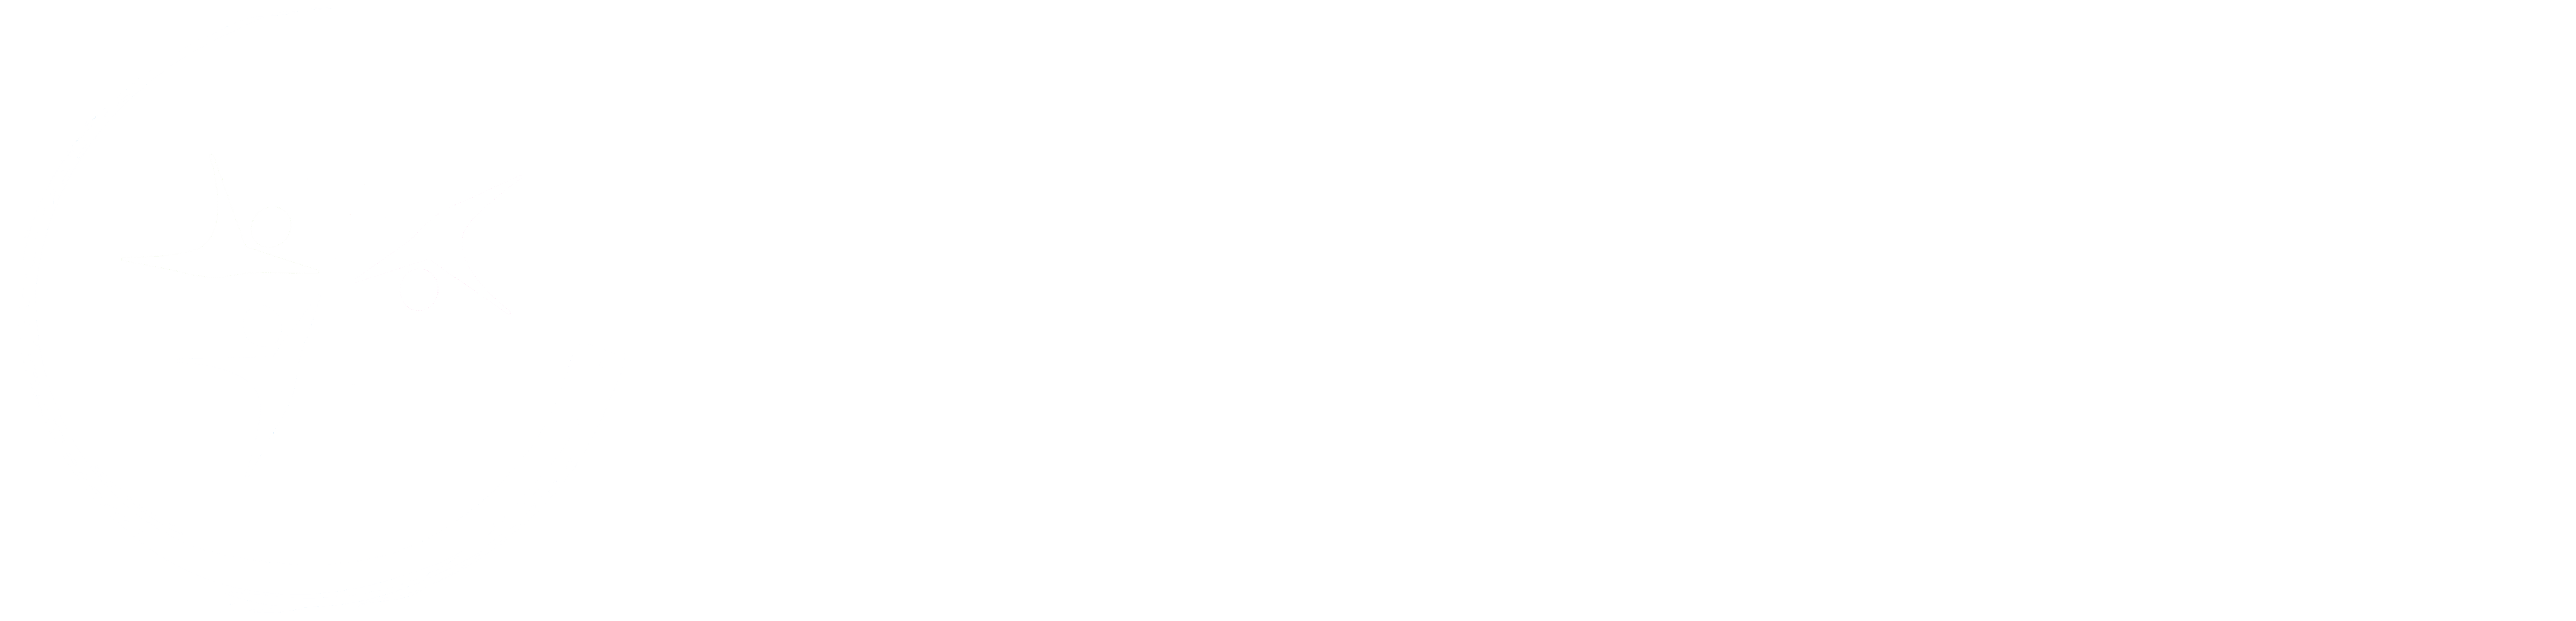 xxi.online - Global Goals Network